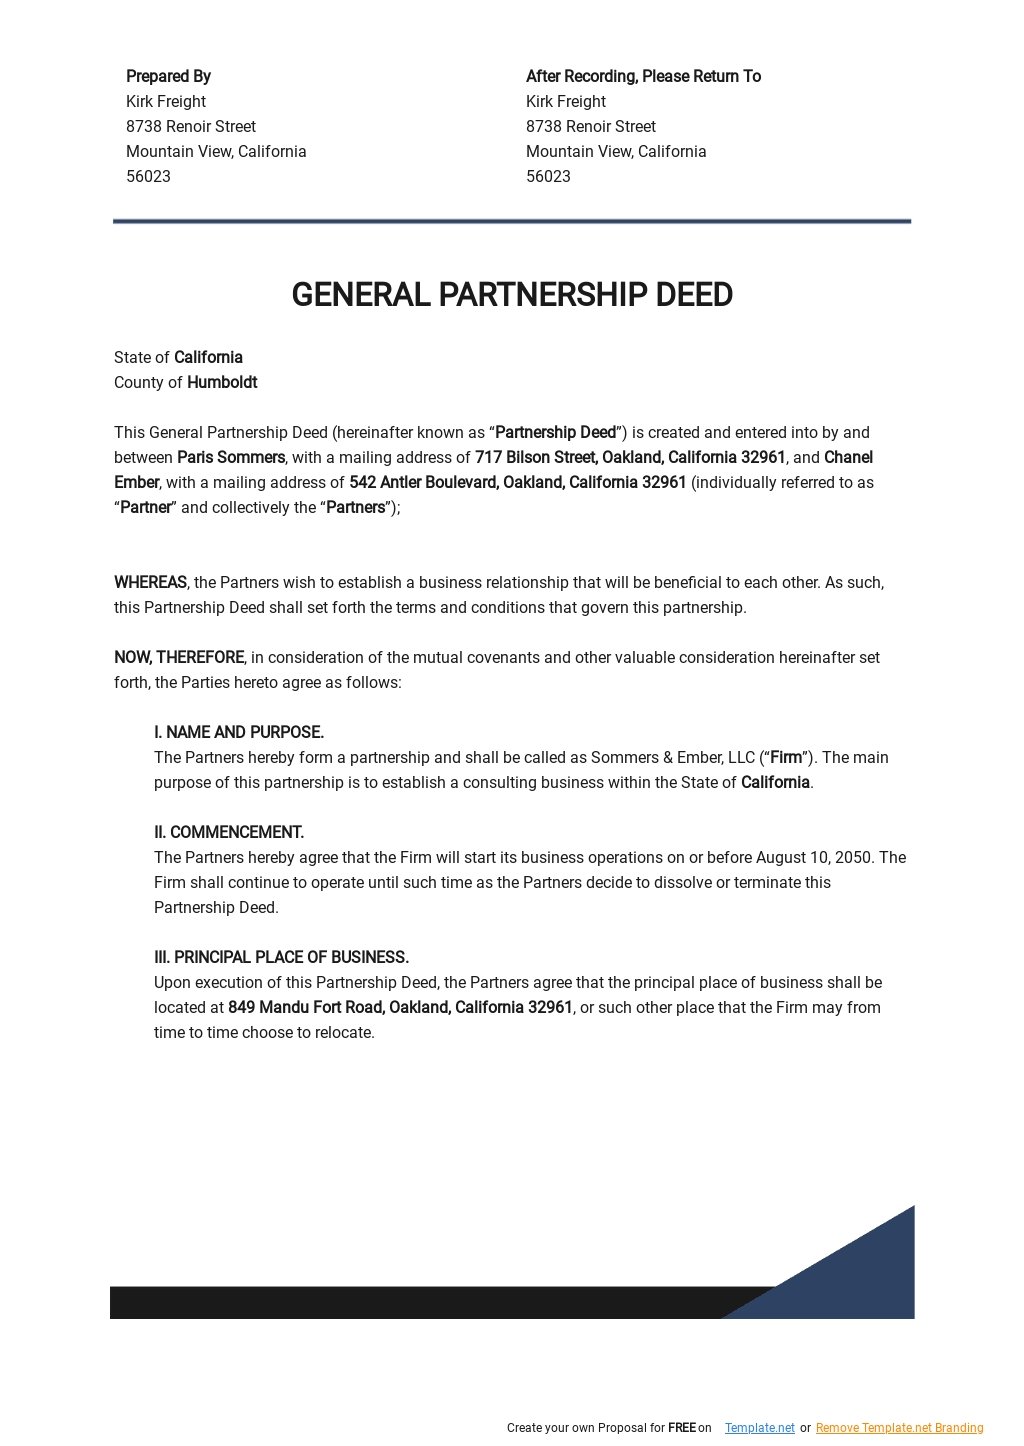 general-partnership-deed-template